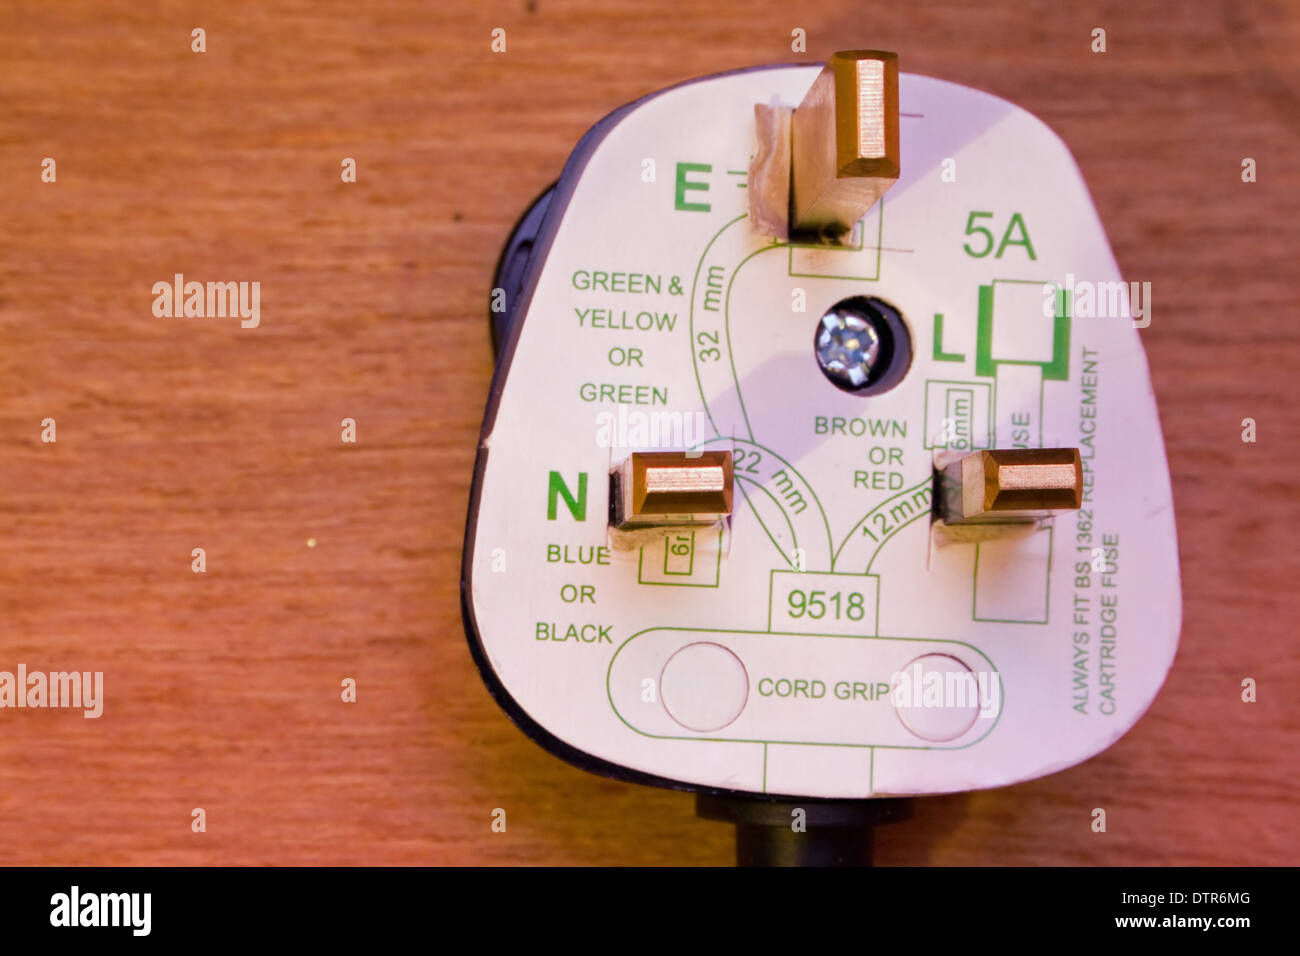 UK three pin plug with wiring diagram Stock Photo ...